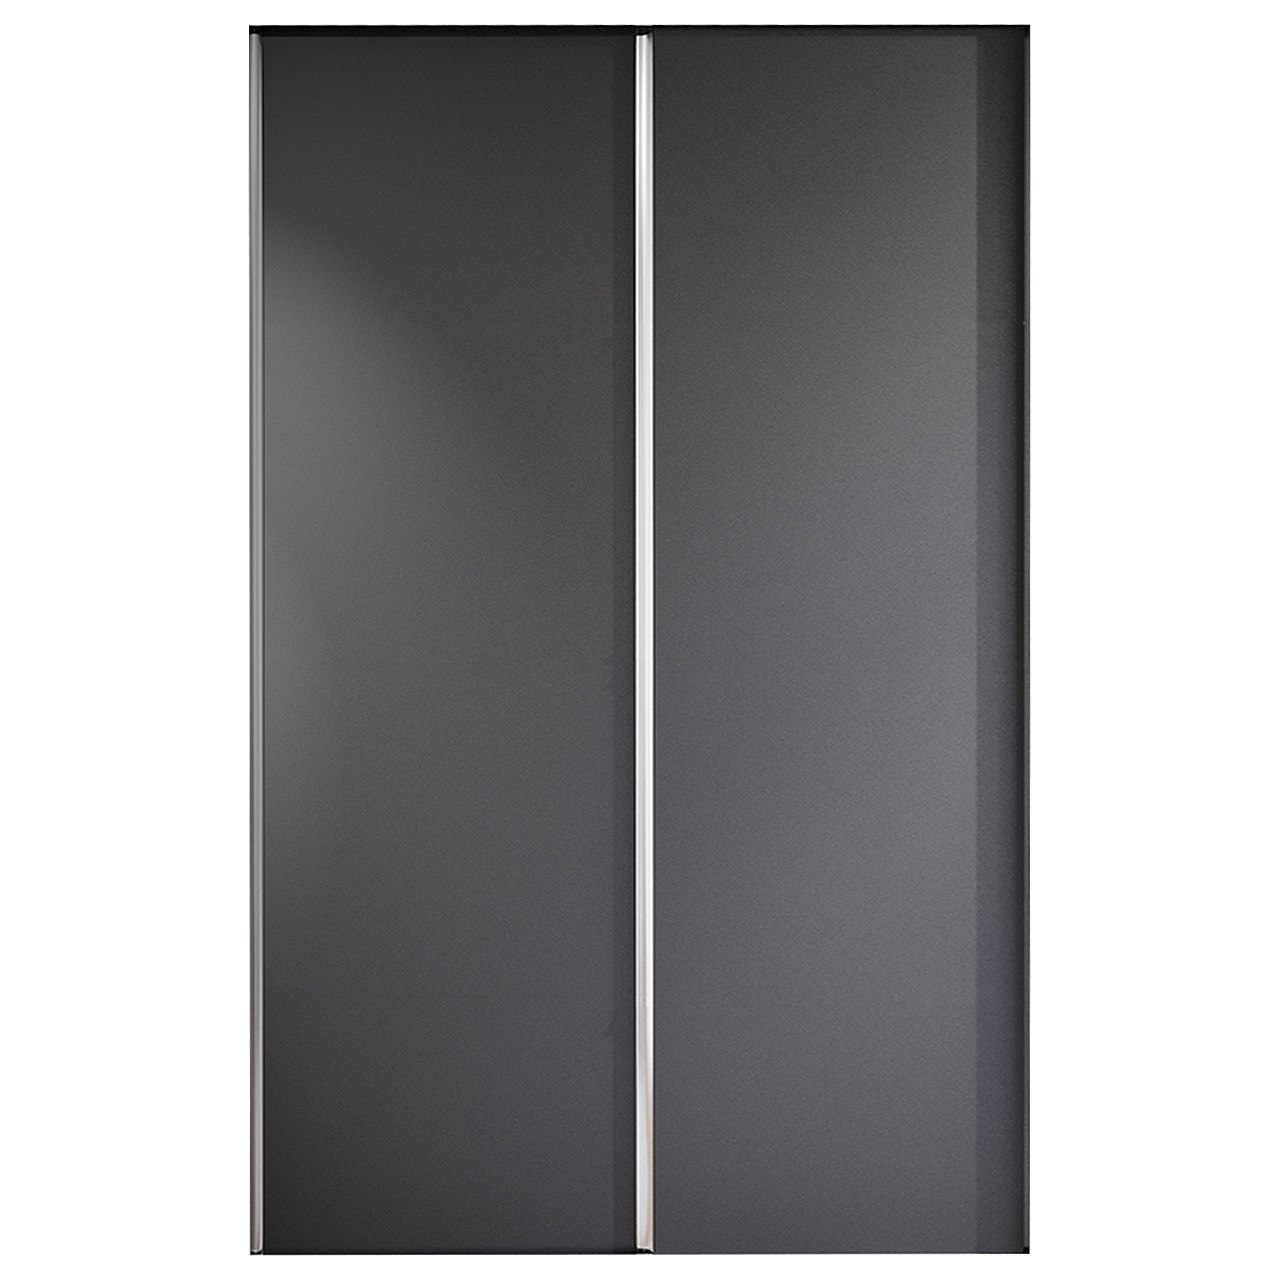 Sliding door for wardrobe MERV F5 120 black